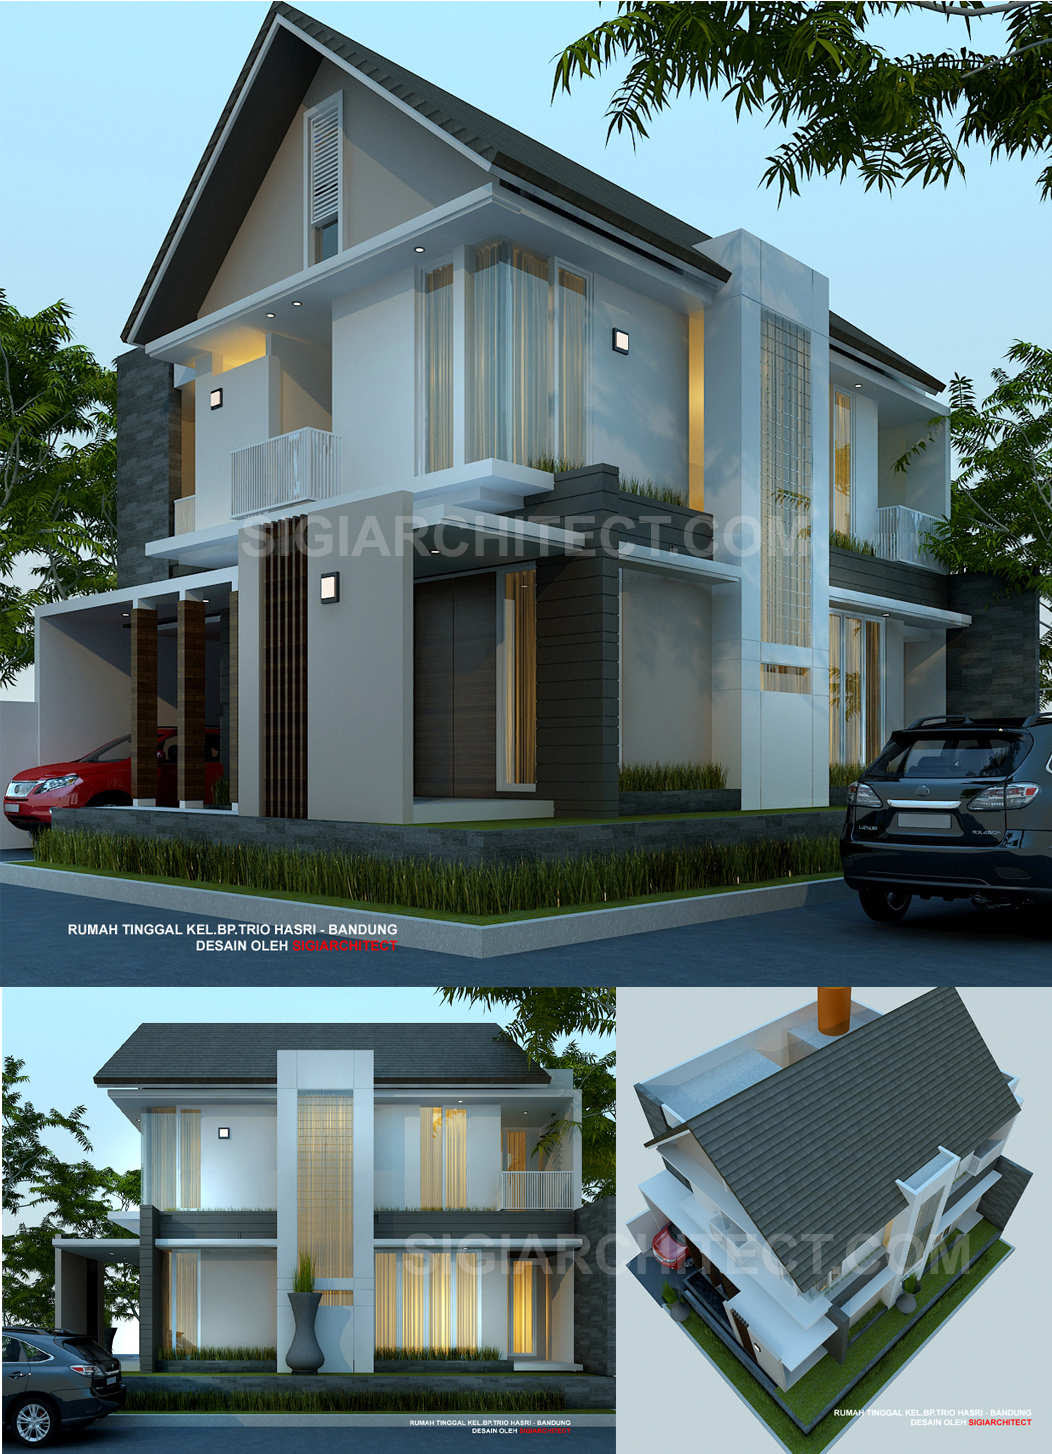  Desain  Rumah  Tumbuh 2  Lantai  Kavling hook  pojok Jasa 